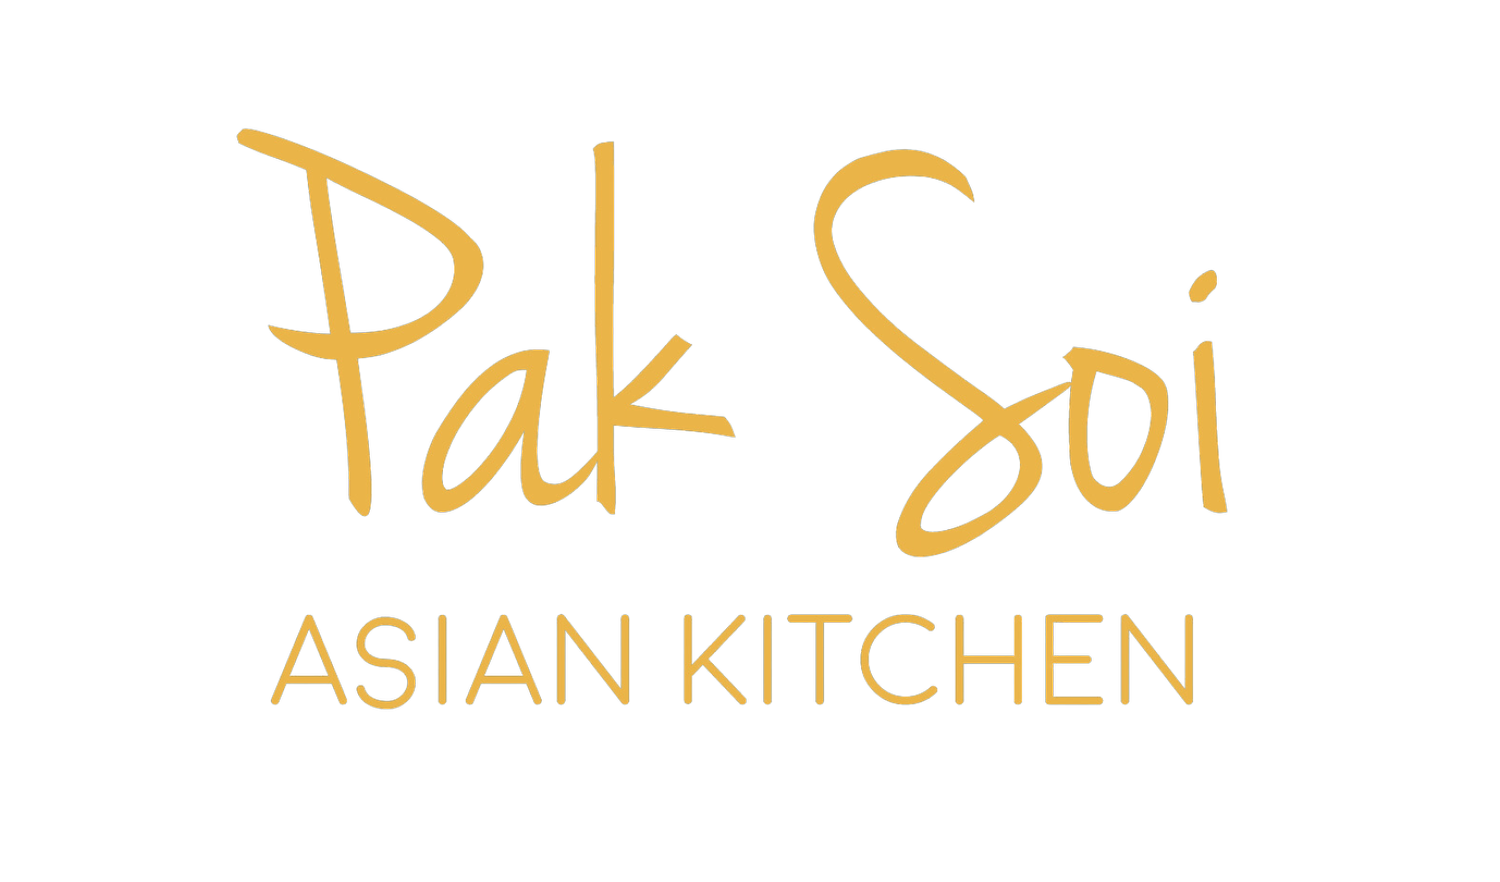 Pak Soi Asian Kitchen